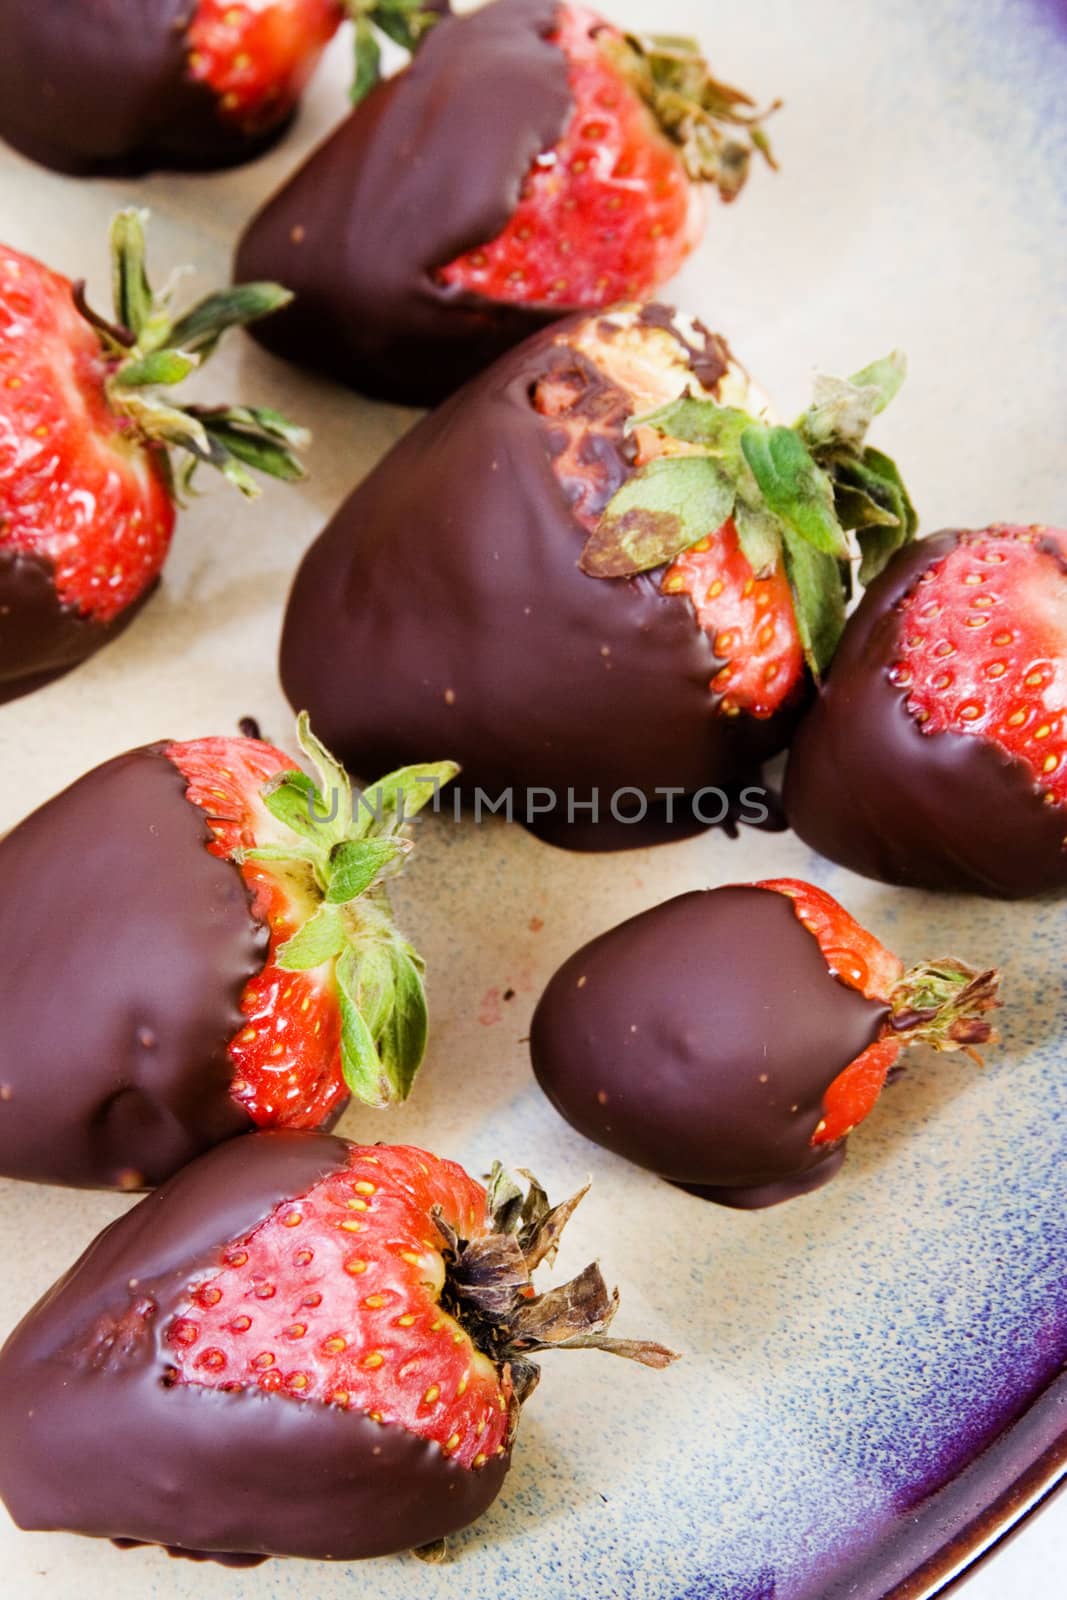 chocolate strawberries by snokid